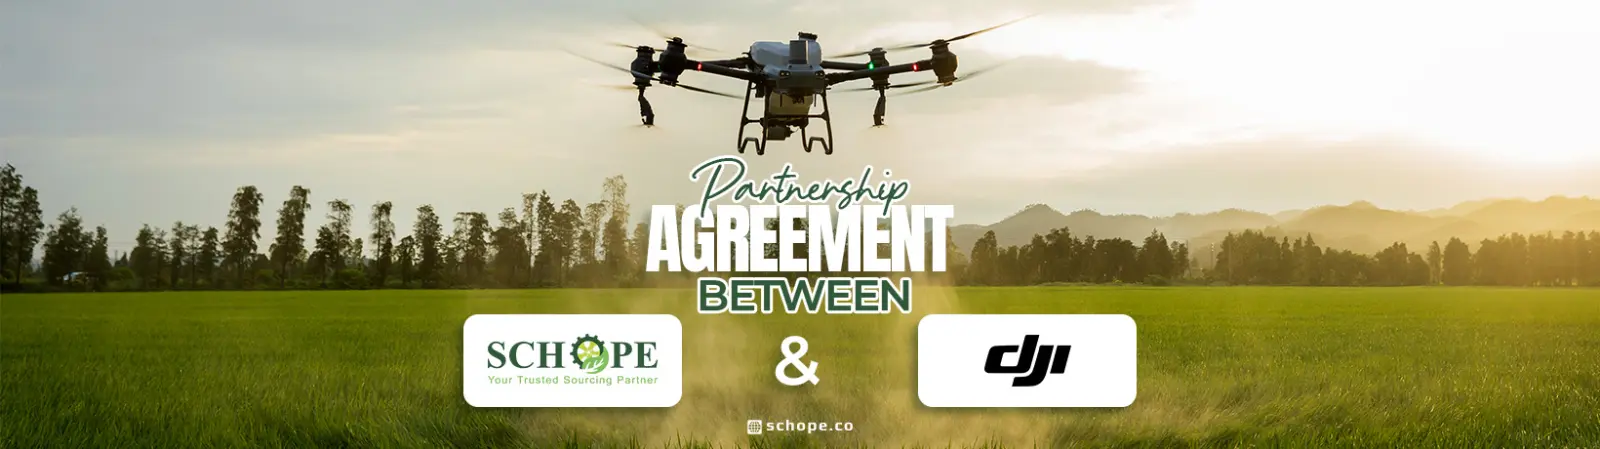 Agriculture Drones Dealer Partnership Agreement Between Schope and DJI